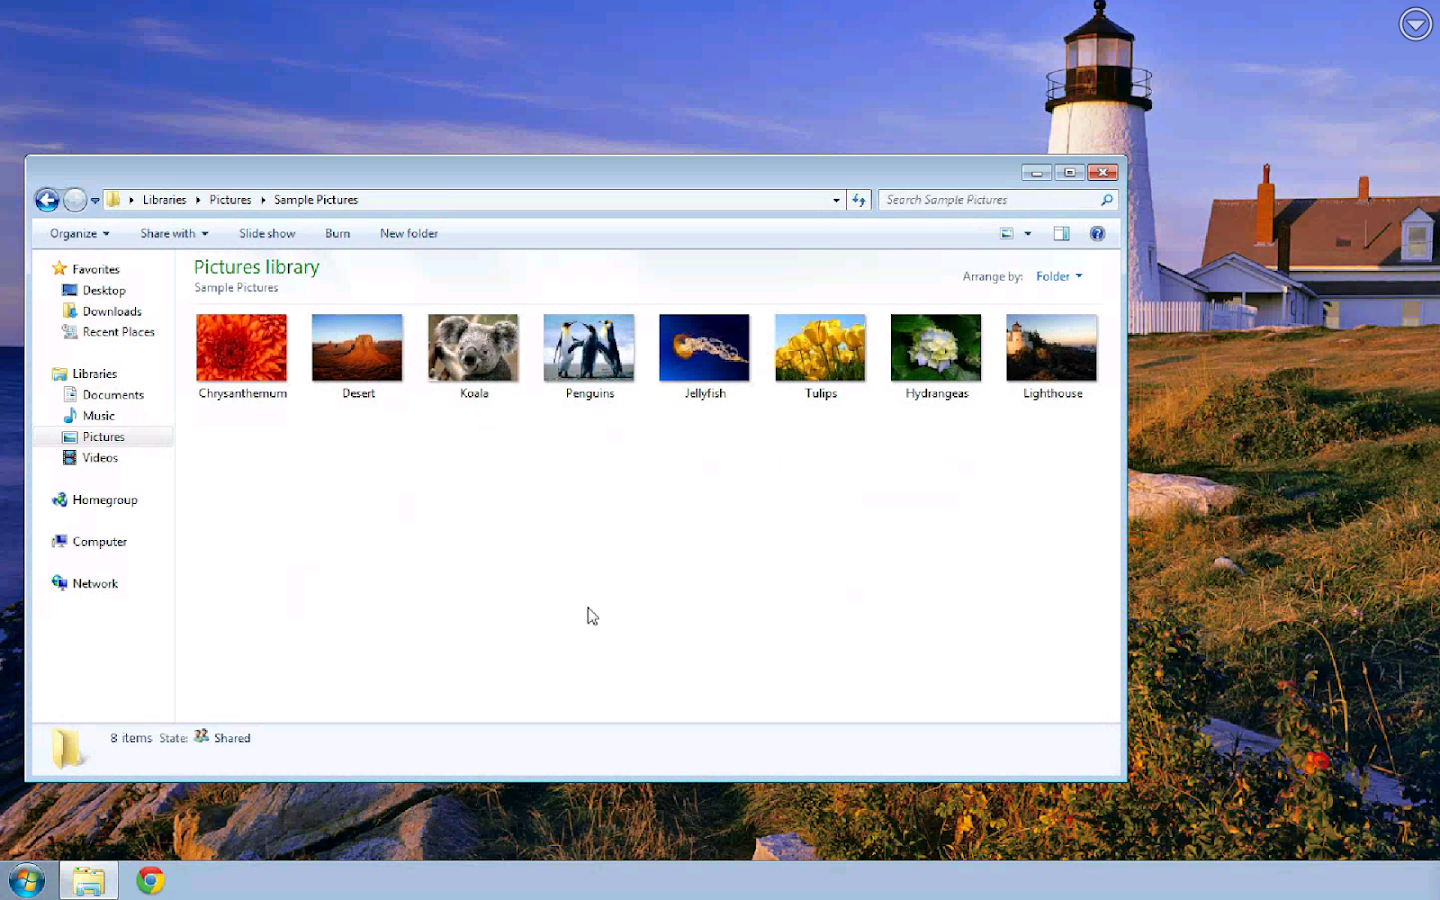 Chrome リモート デスクトップ - screenshot